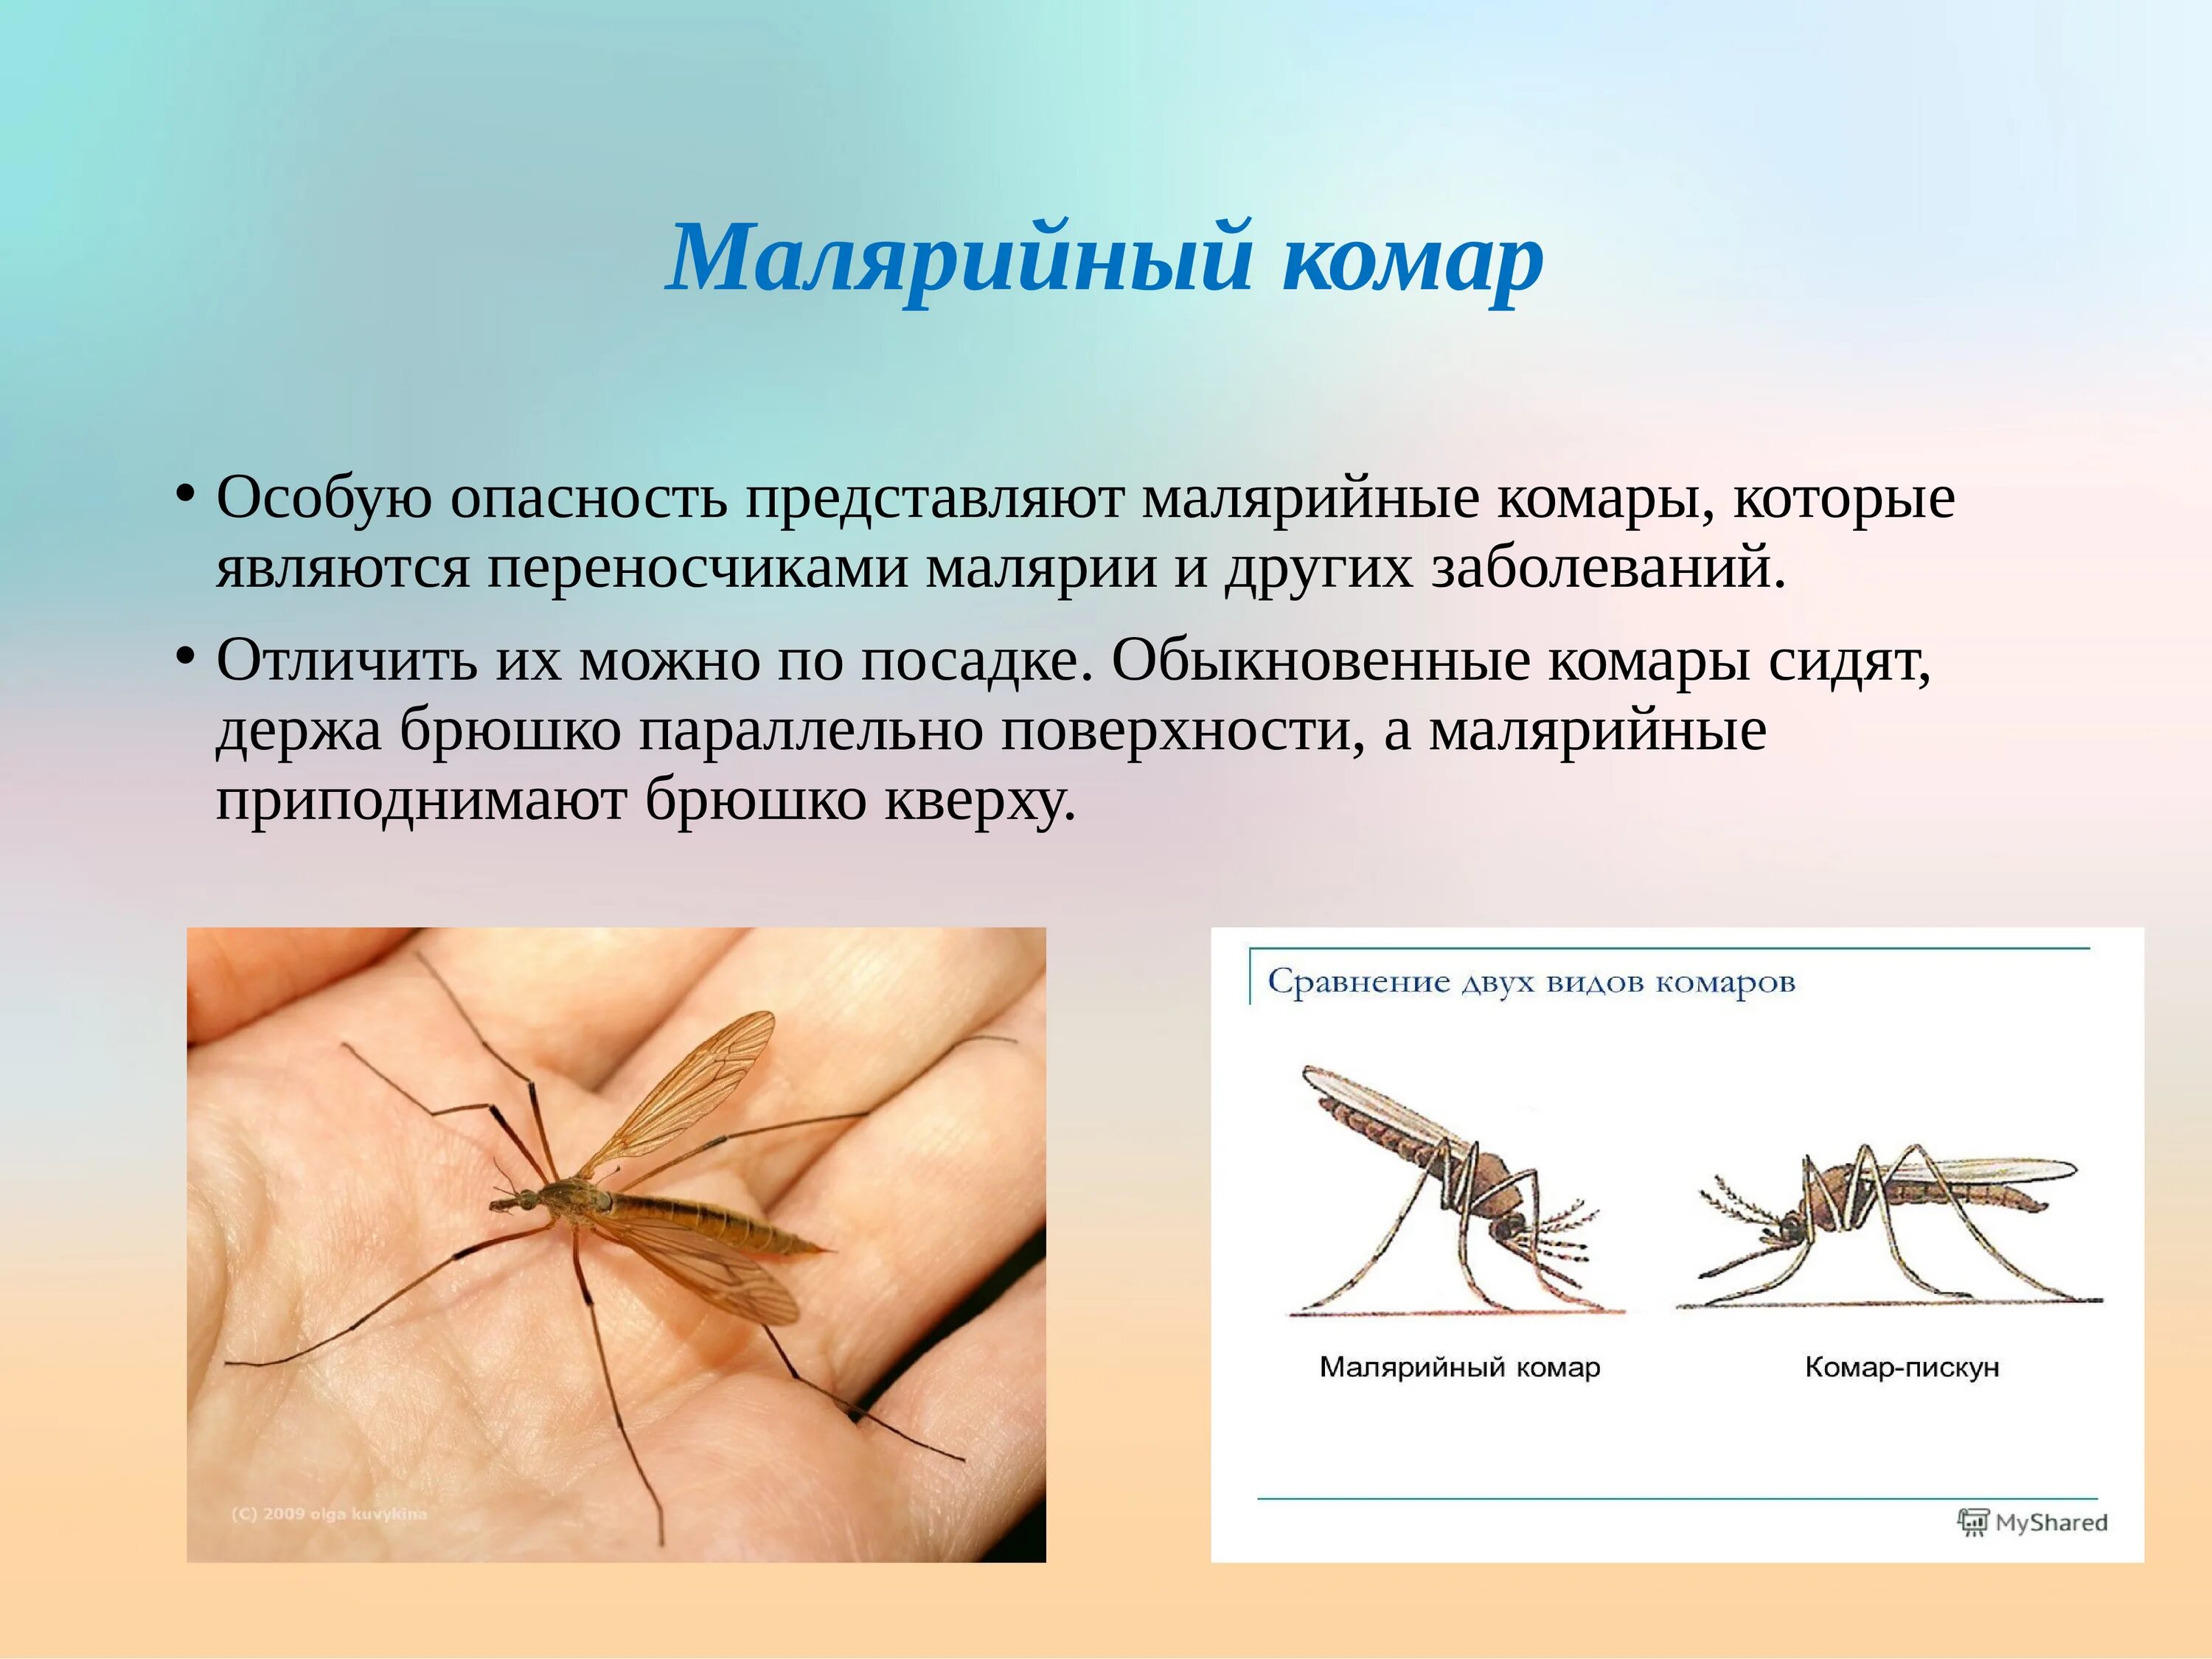 Какое развитие у малярийного комара. Малярийный комар и малярийный комар. Малярийный комар и Пискун. Малярийный комар опасен. Малярийный комар размер.